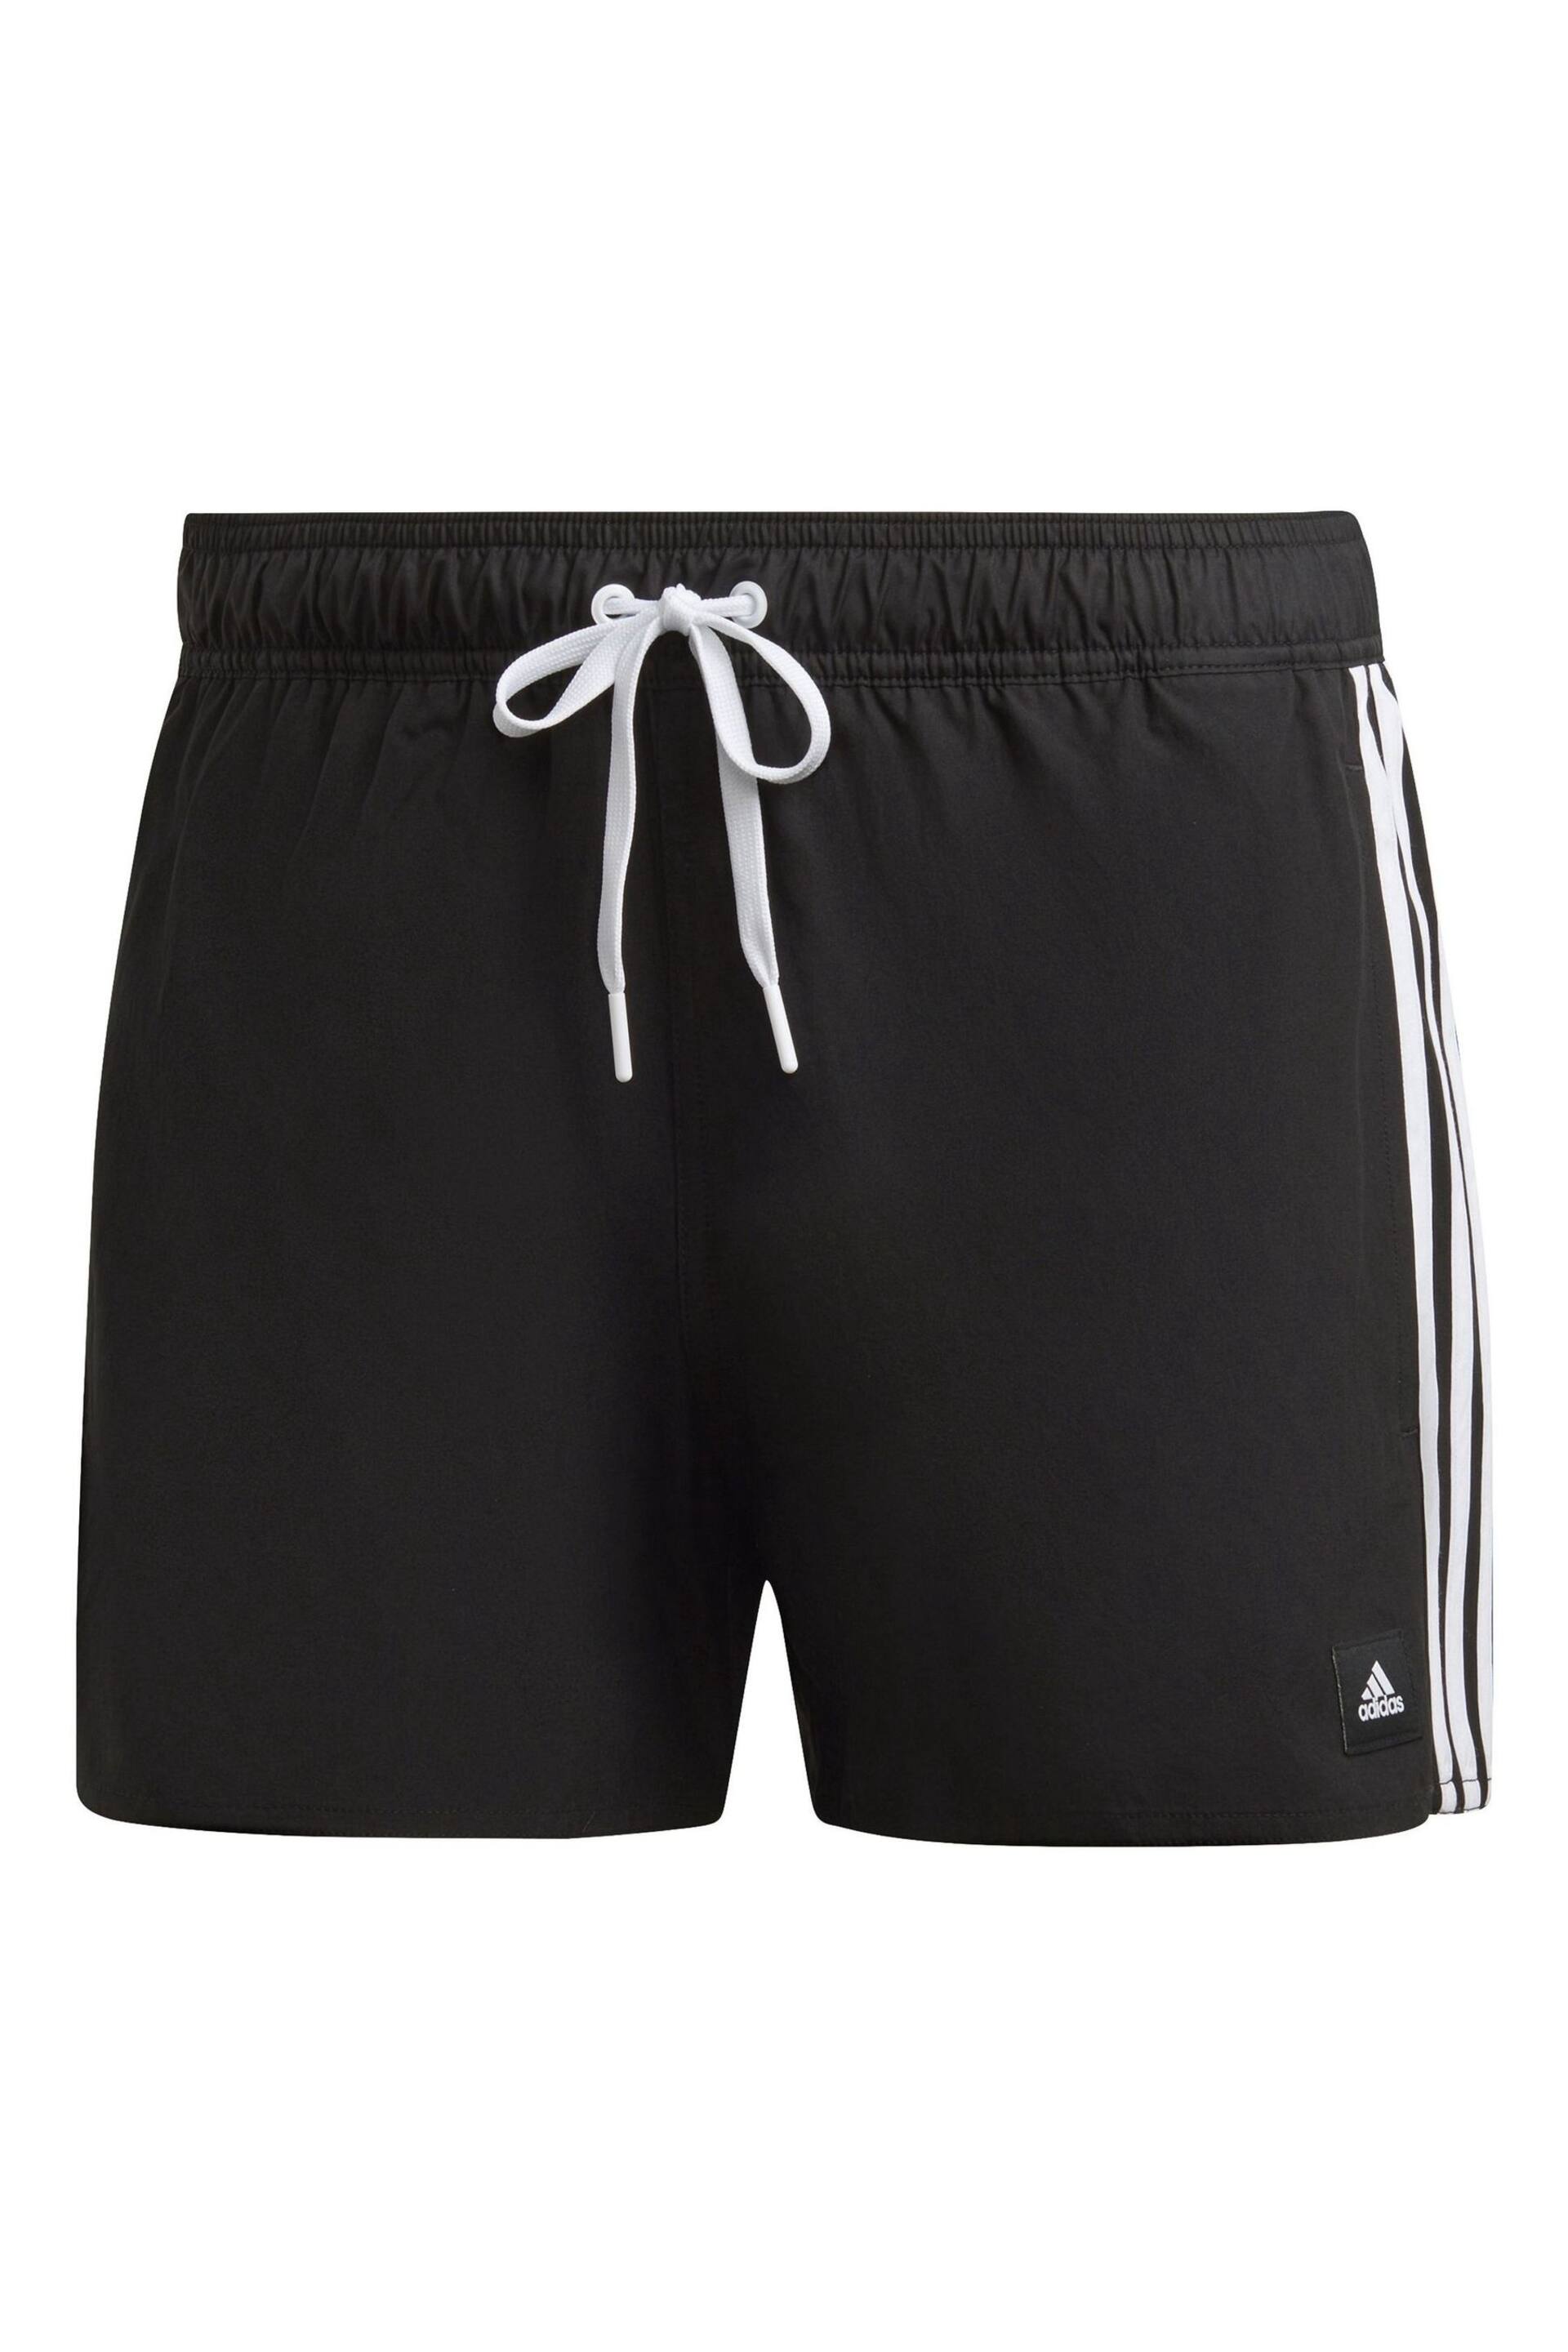 adidas Black Performance 3-Stripes Clx Very-Short-Length Swim Orange Shorts - Image 6 of 6